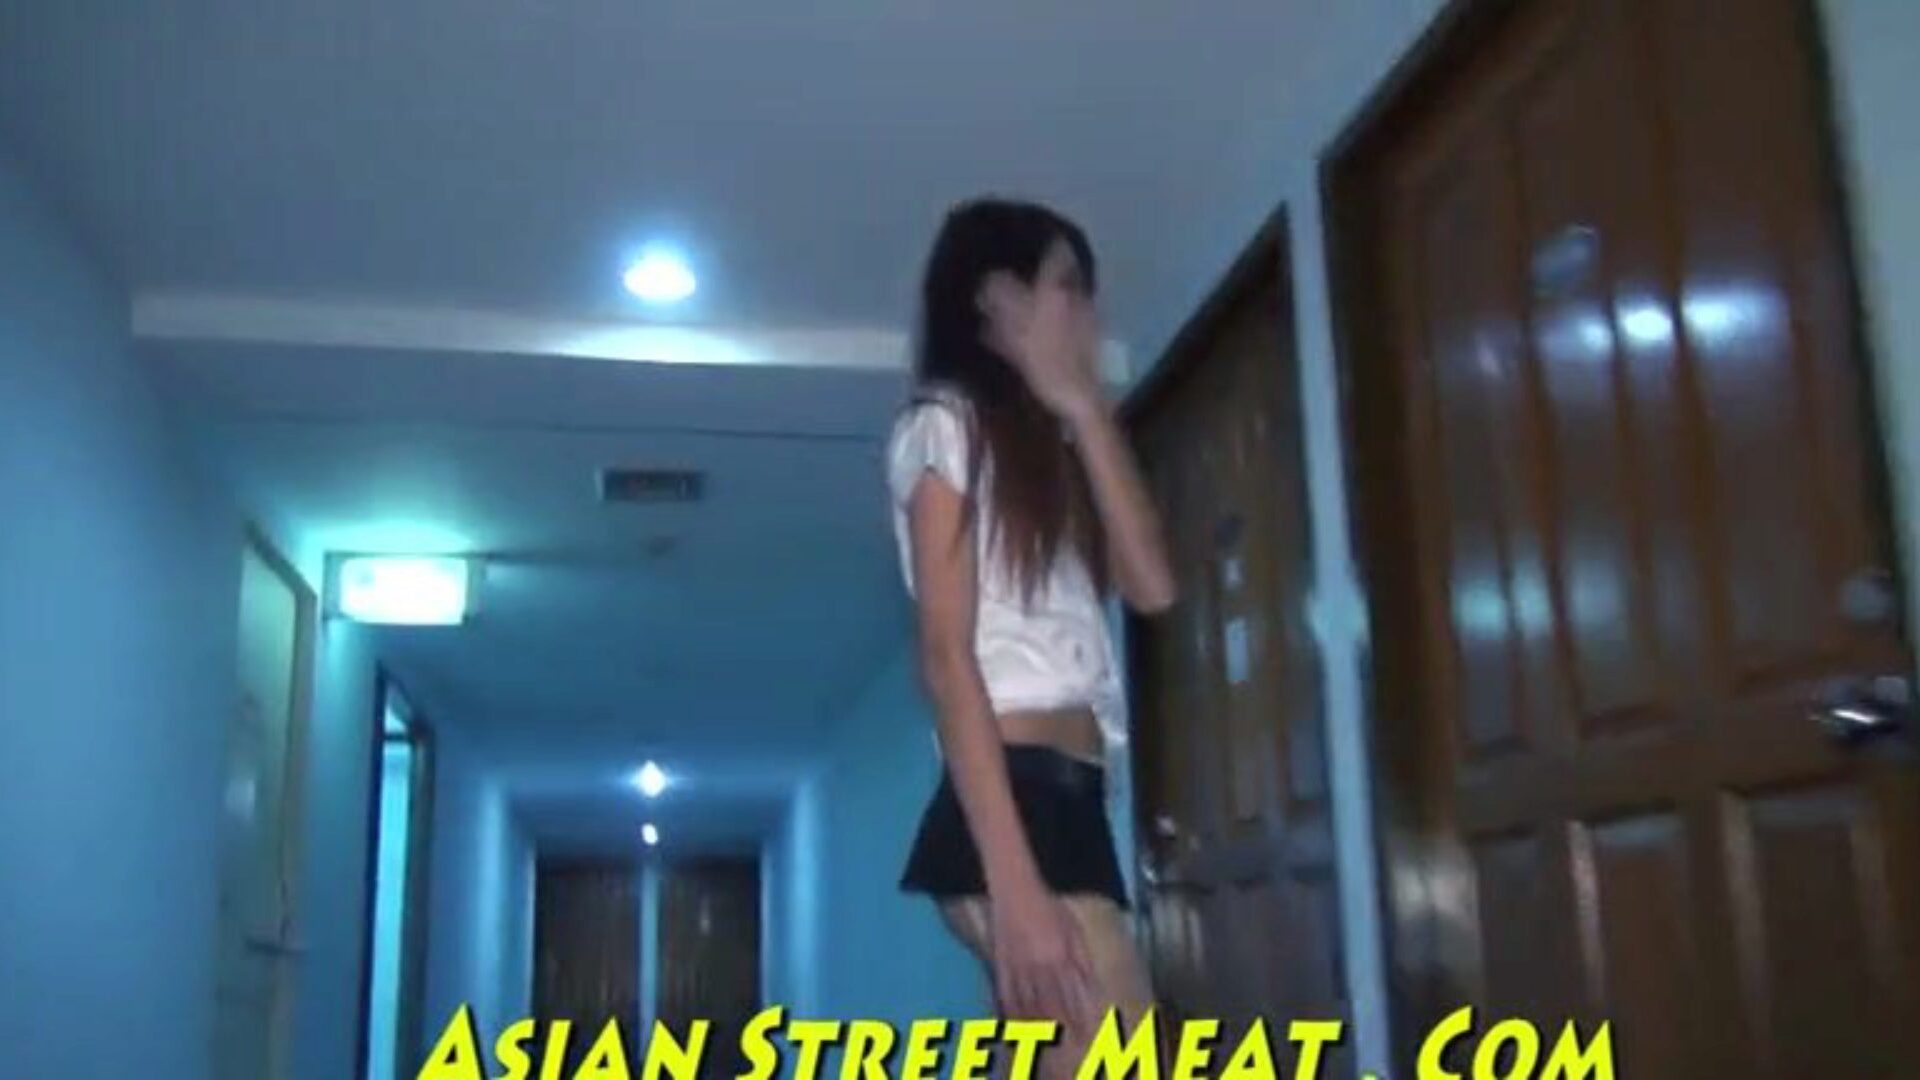 Thai Slut Anal Pumped Betwixt Diminutive Pleasing Ass Cheeks